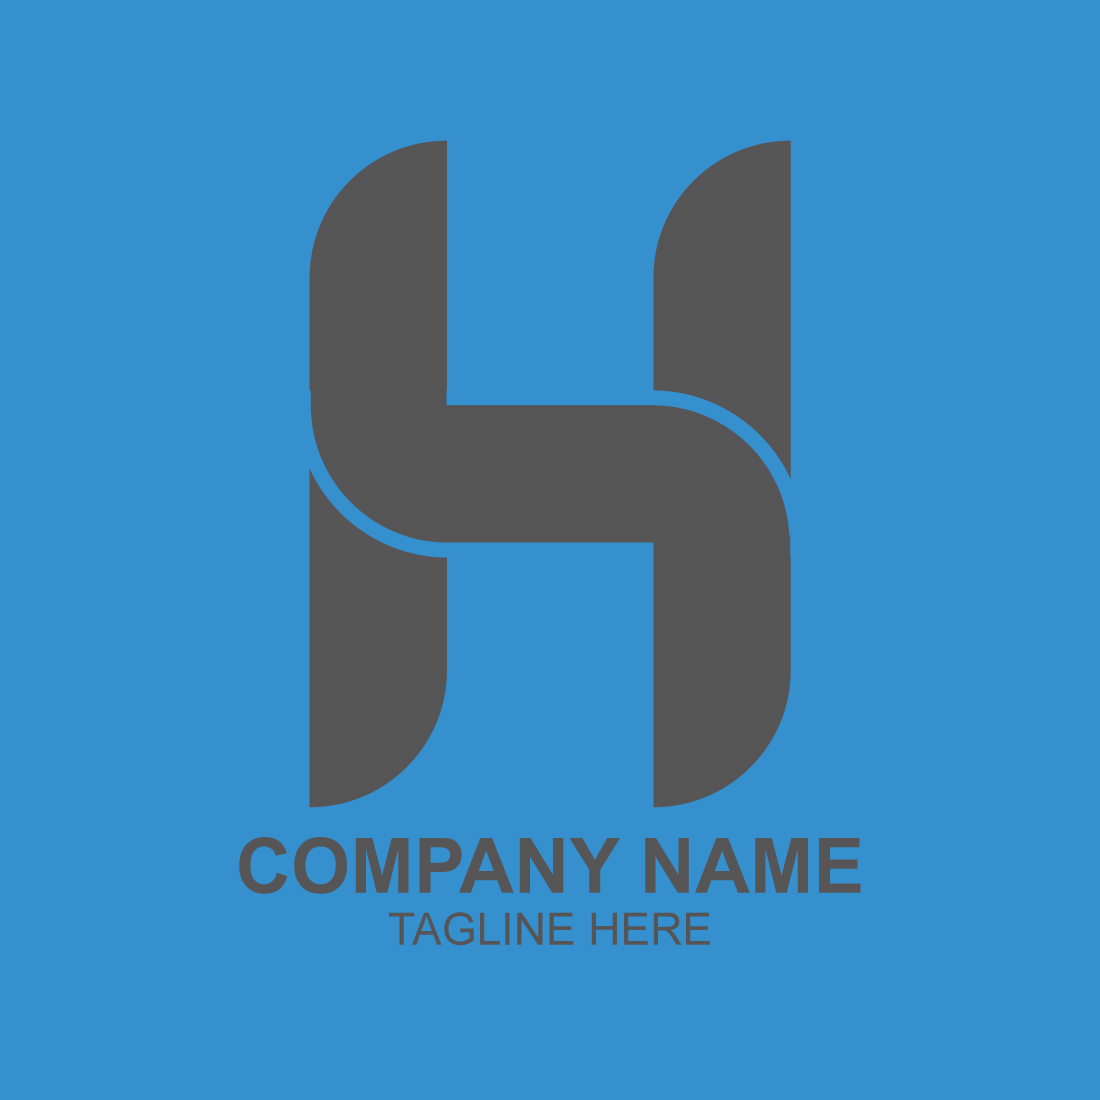 Modern H Letter Logo Design cover image.